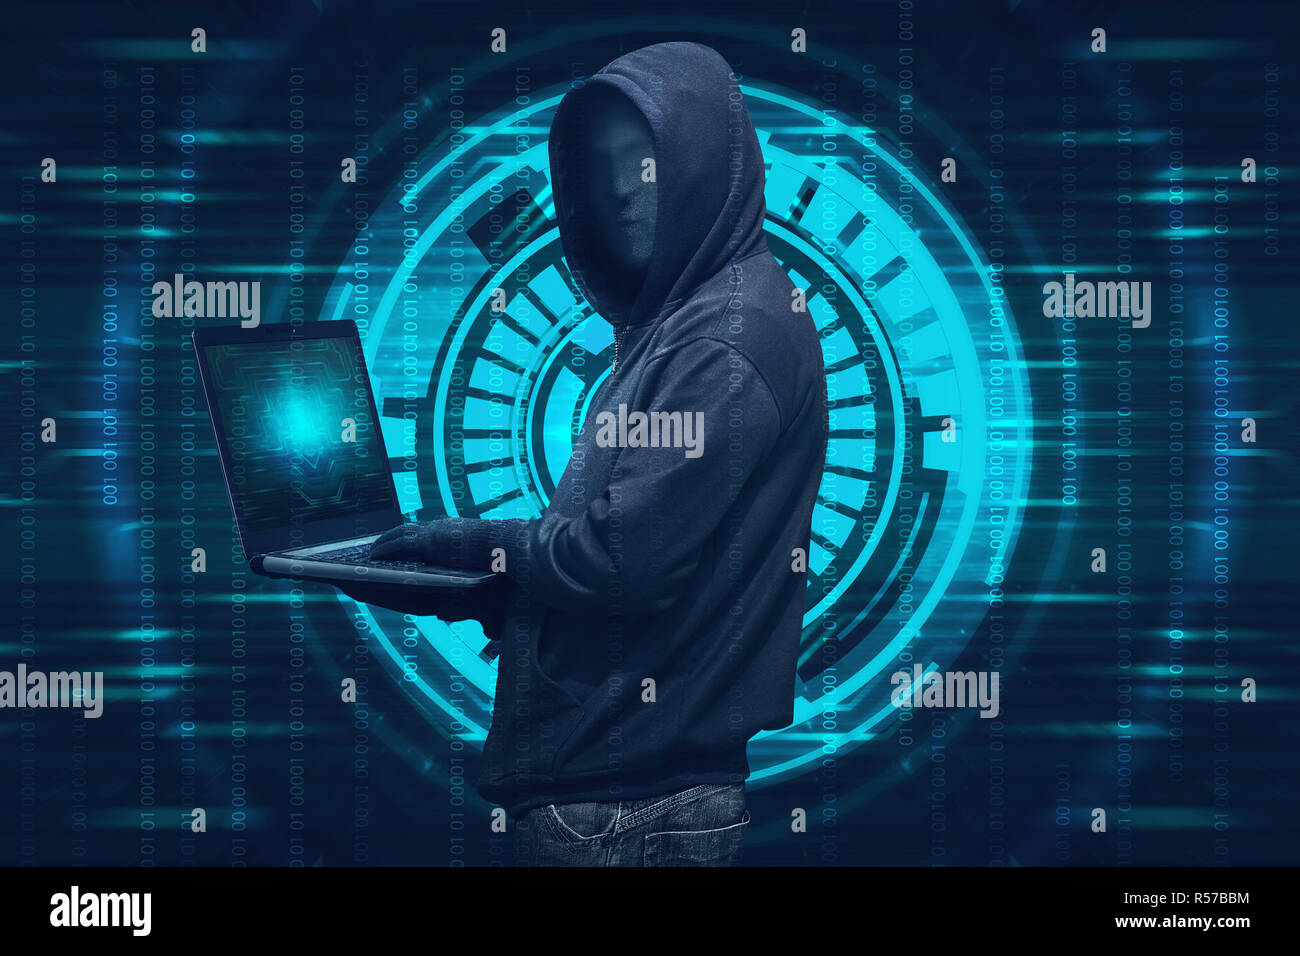 Hacker with laptop hacker security measure Stock Illustration  Adobe Stock